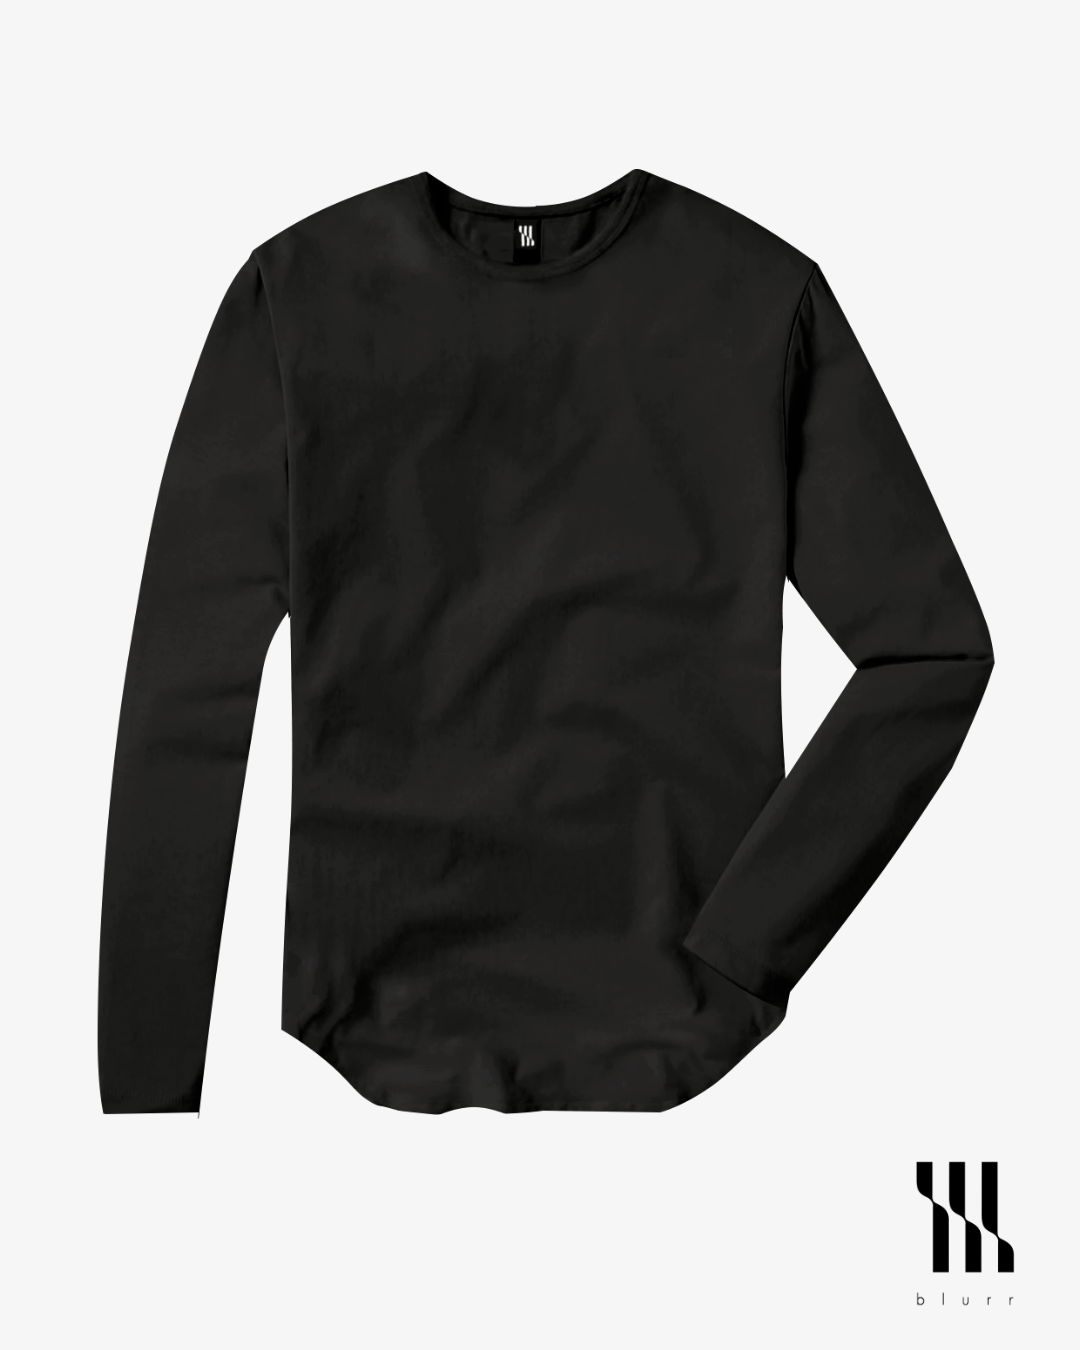 Black T-shirt - Long Sleeve Crew Neck Original Bottom